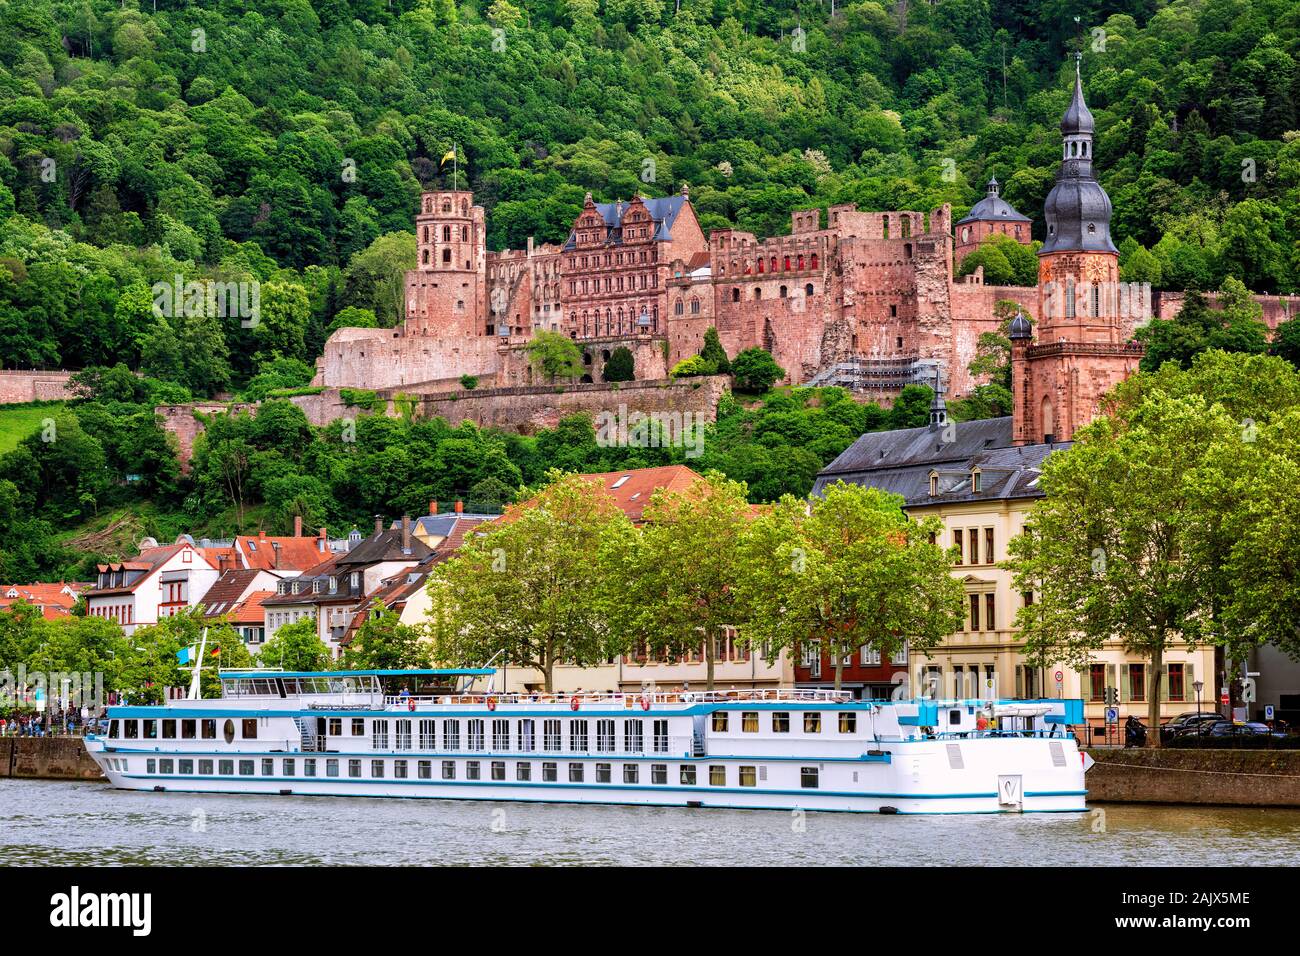 Heidelberg city on Neckar river is a popular tourist destination on the Romantic Road in Germany Stock Photo